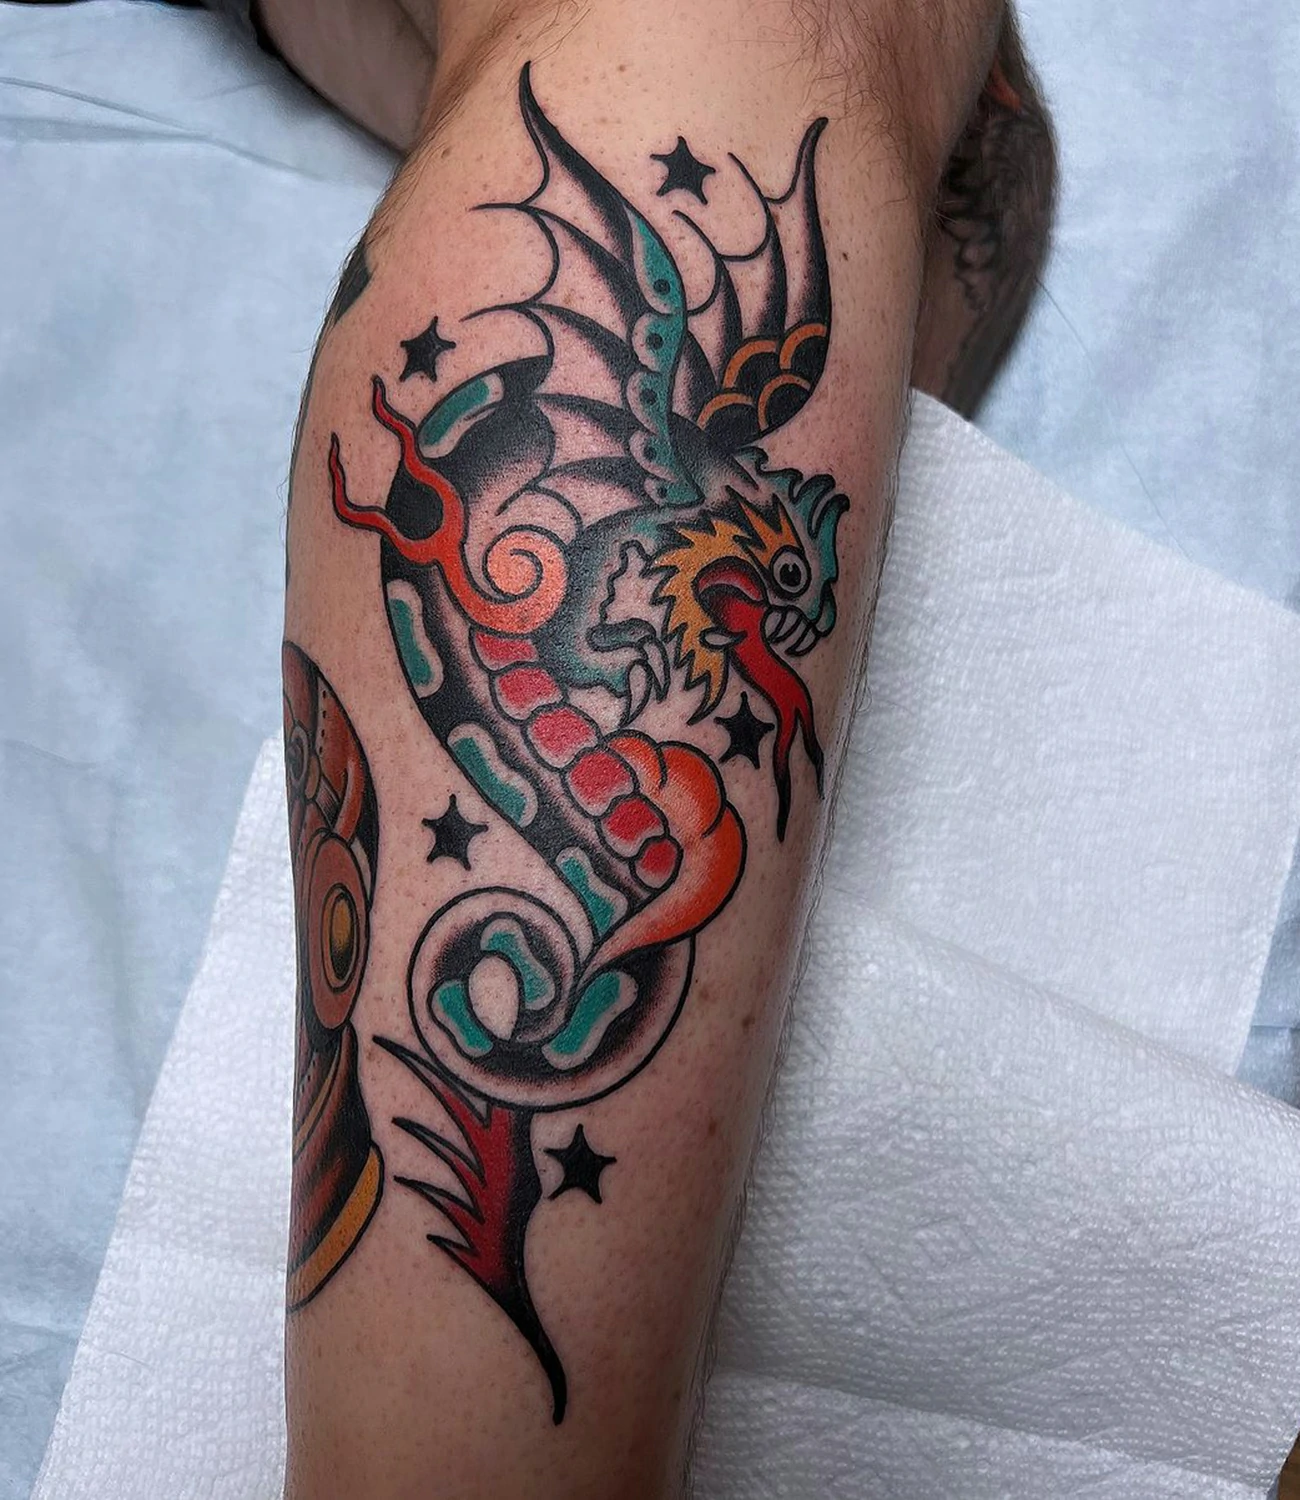 Sailor Jerry Dragon Tattoo